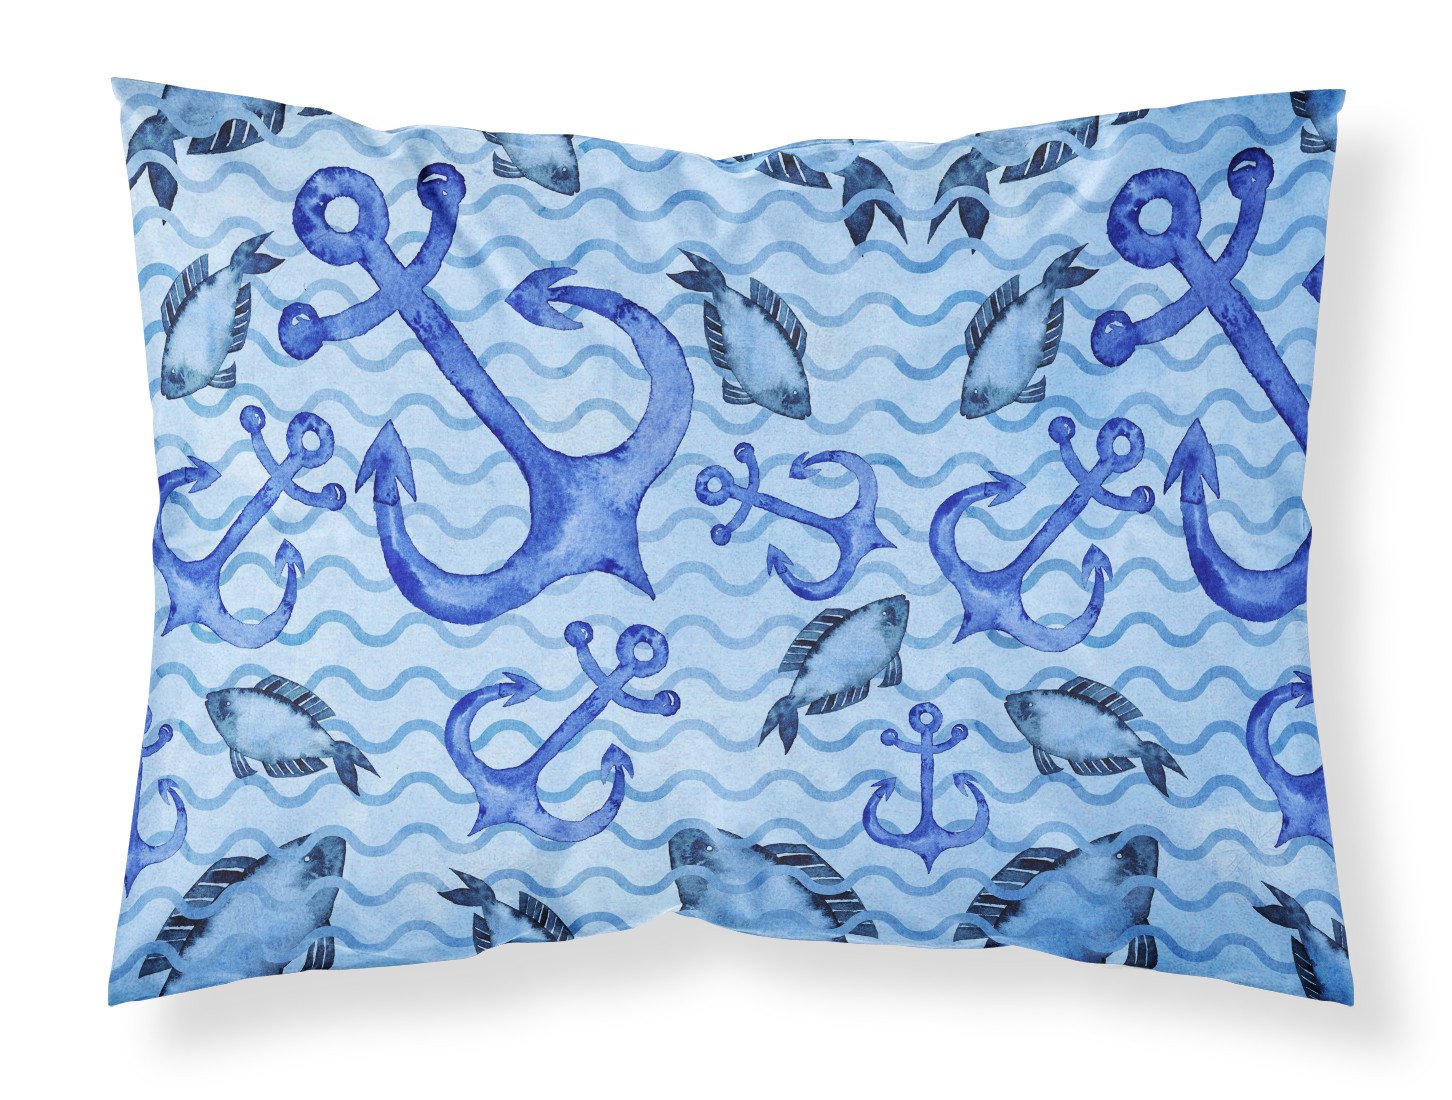 Beach Watercolor Anchors and Fish Fabric Standard Pillowcase BB7534PILLOWCASE by Caroline's Treasures